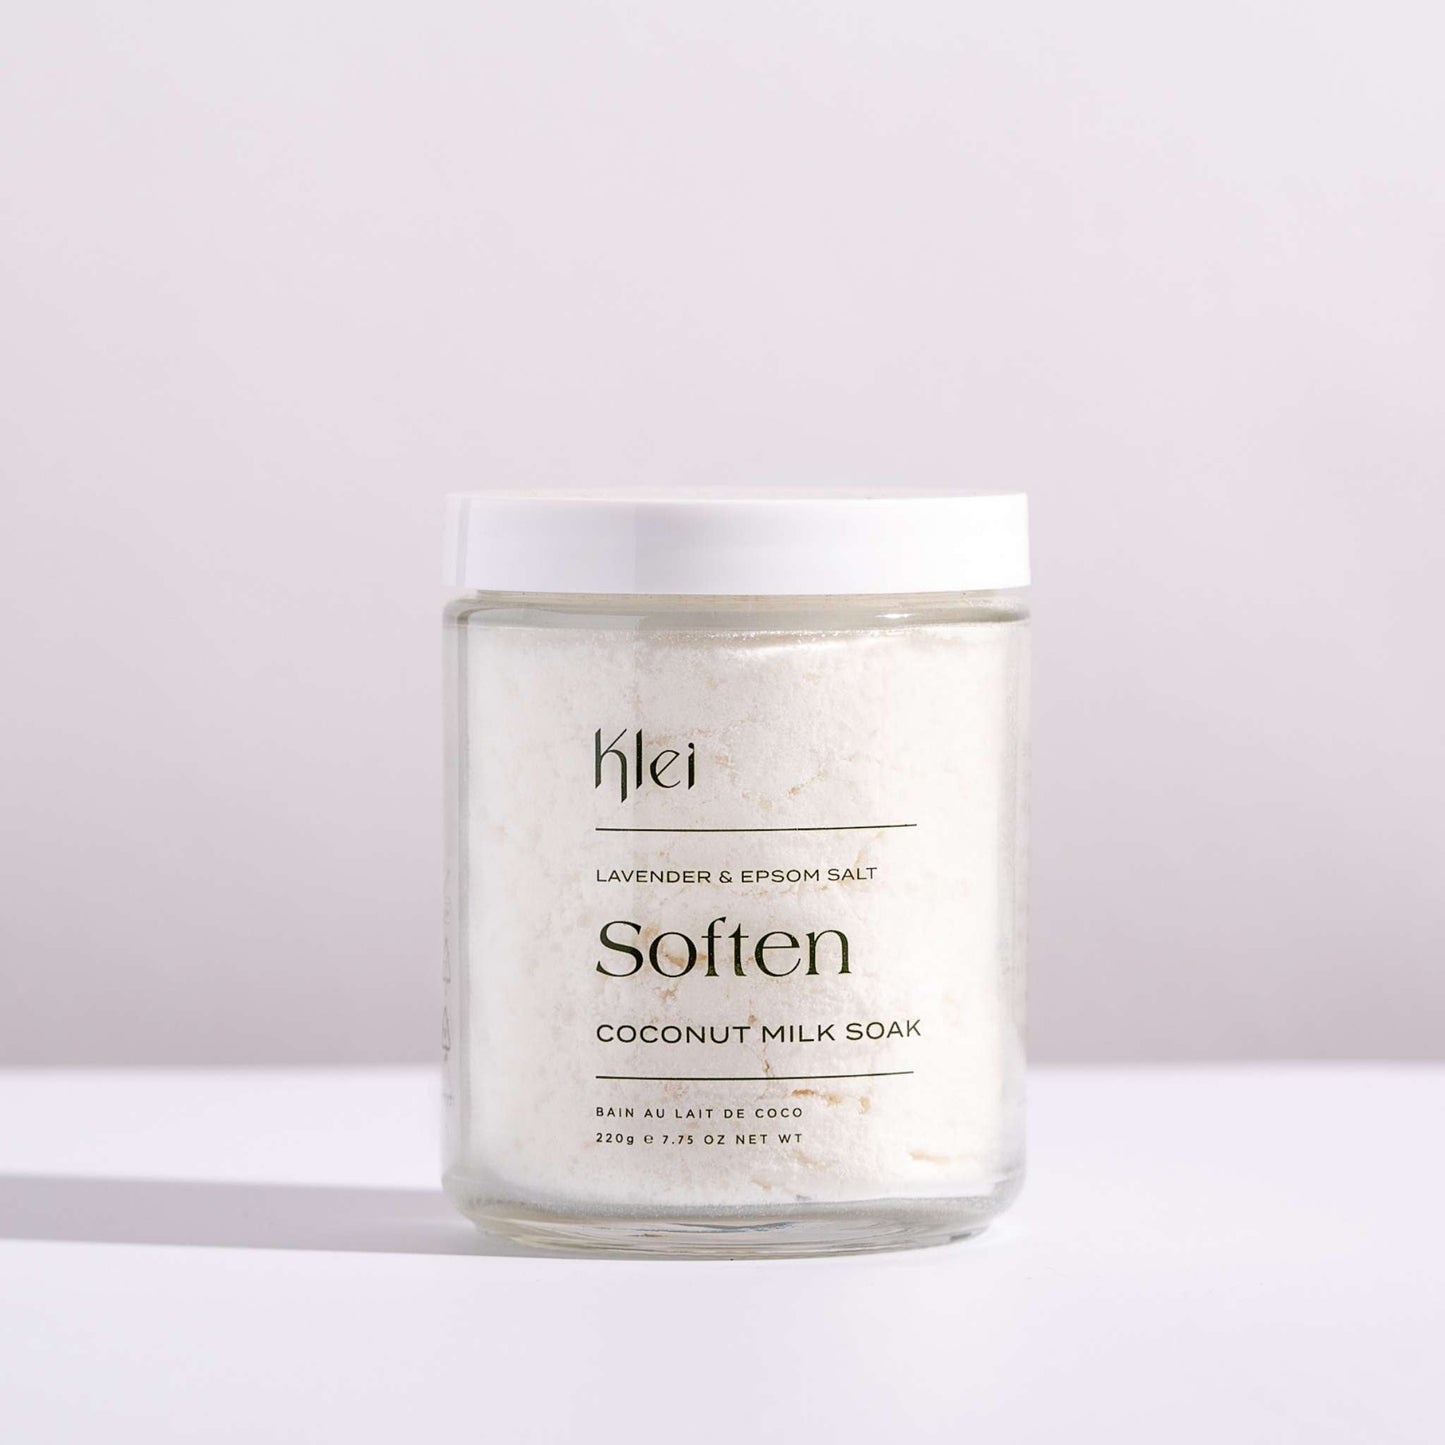 Klei: Soften Lavender & Epsom Salt Coconut Milk Bath Soak